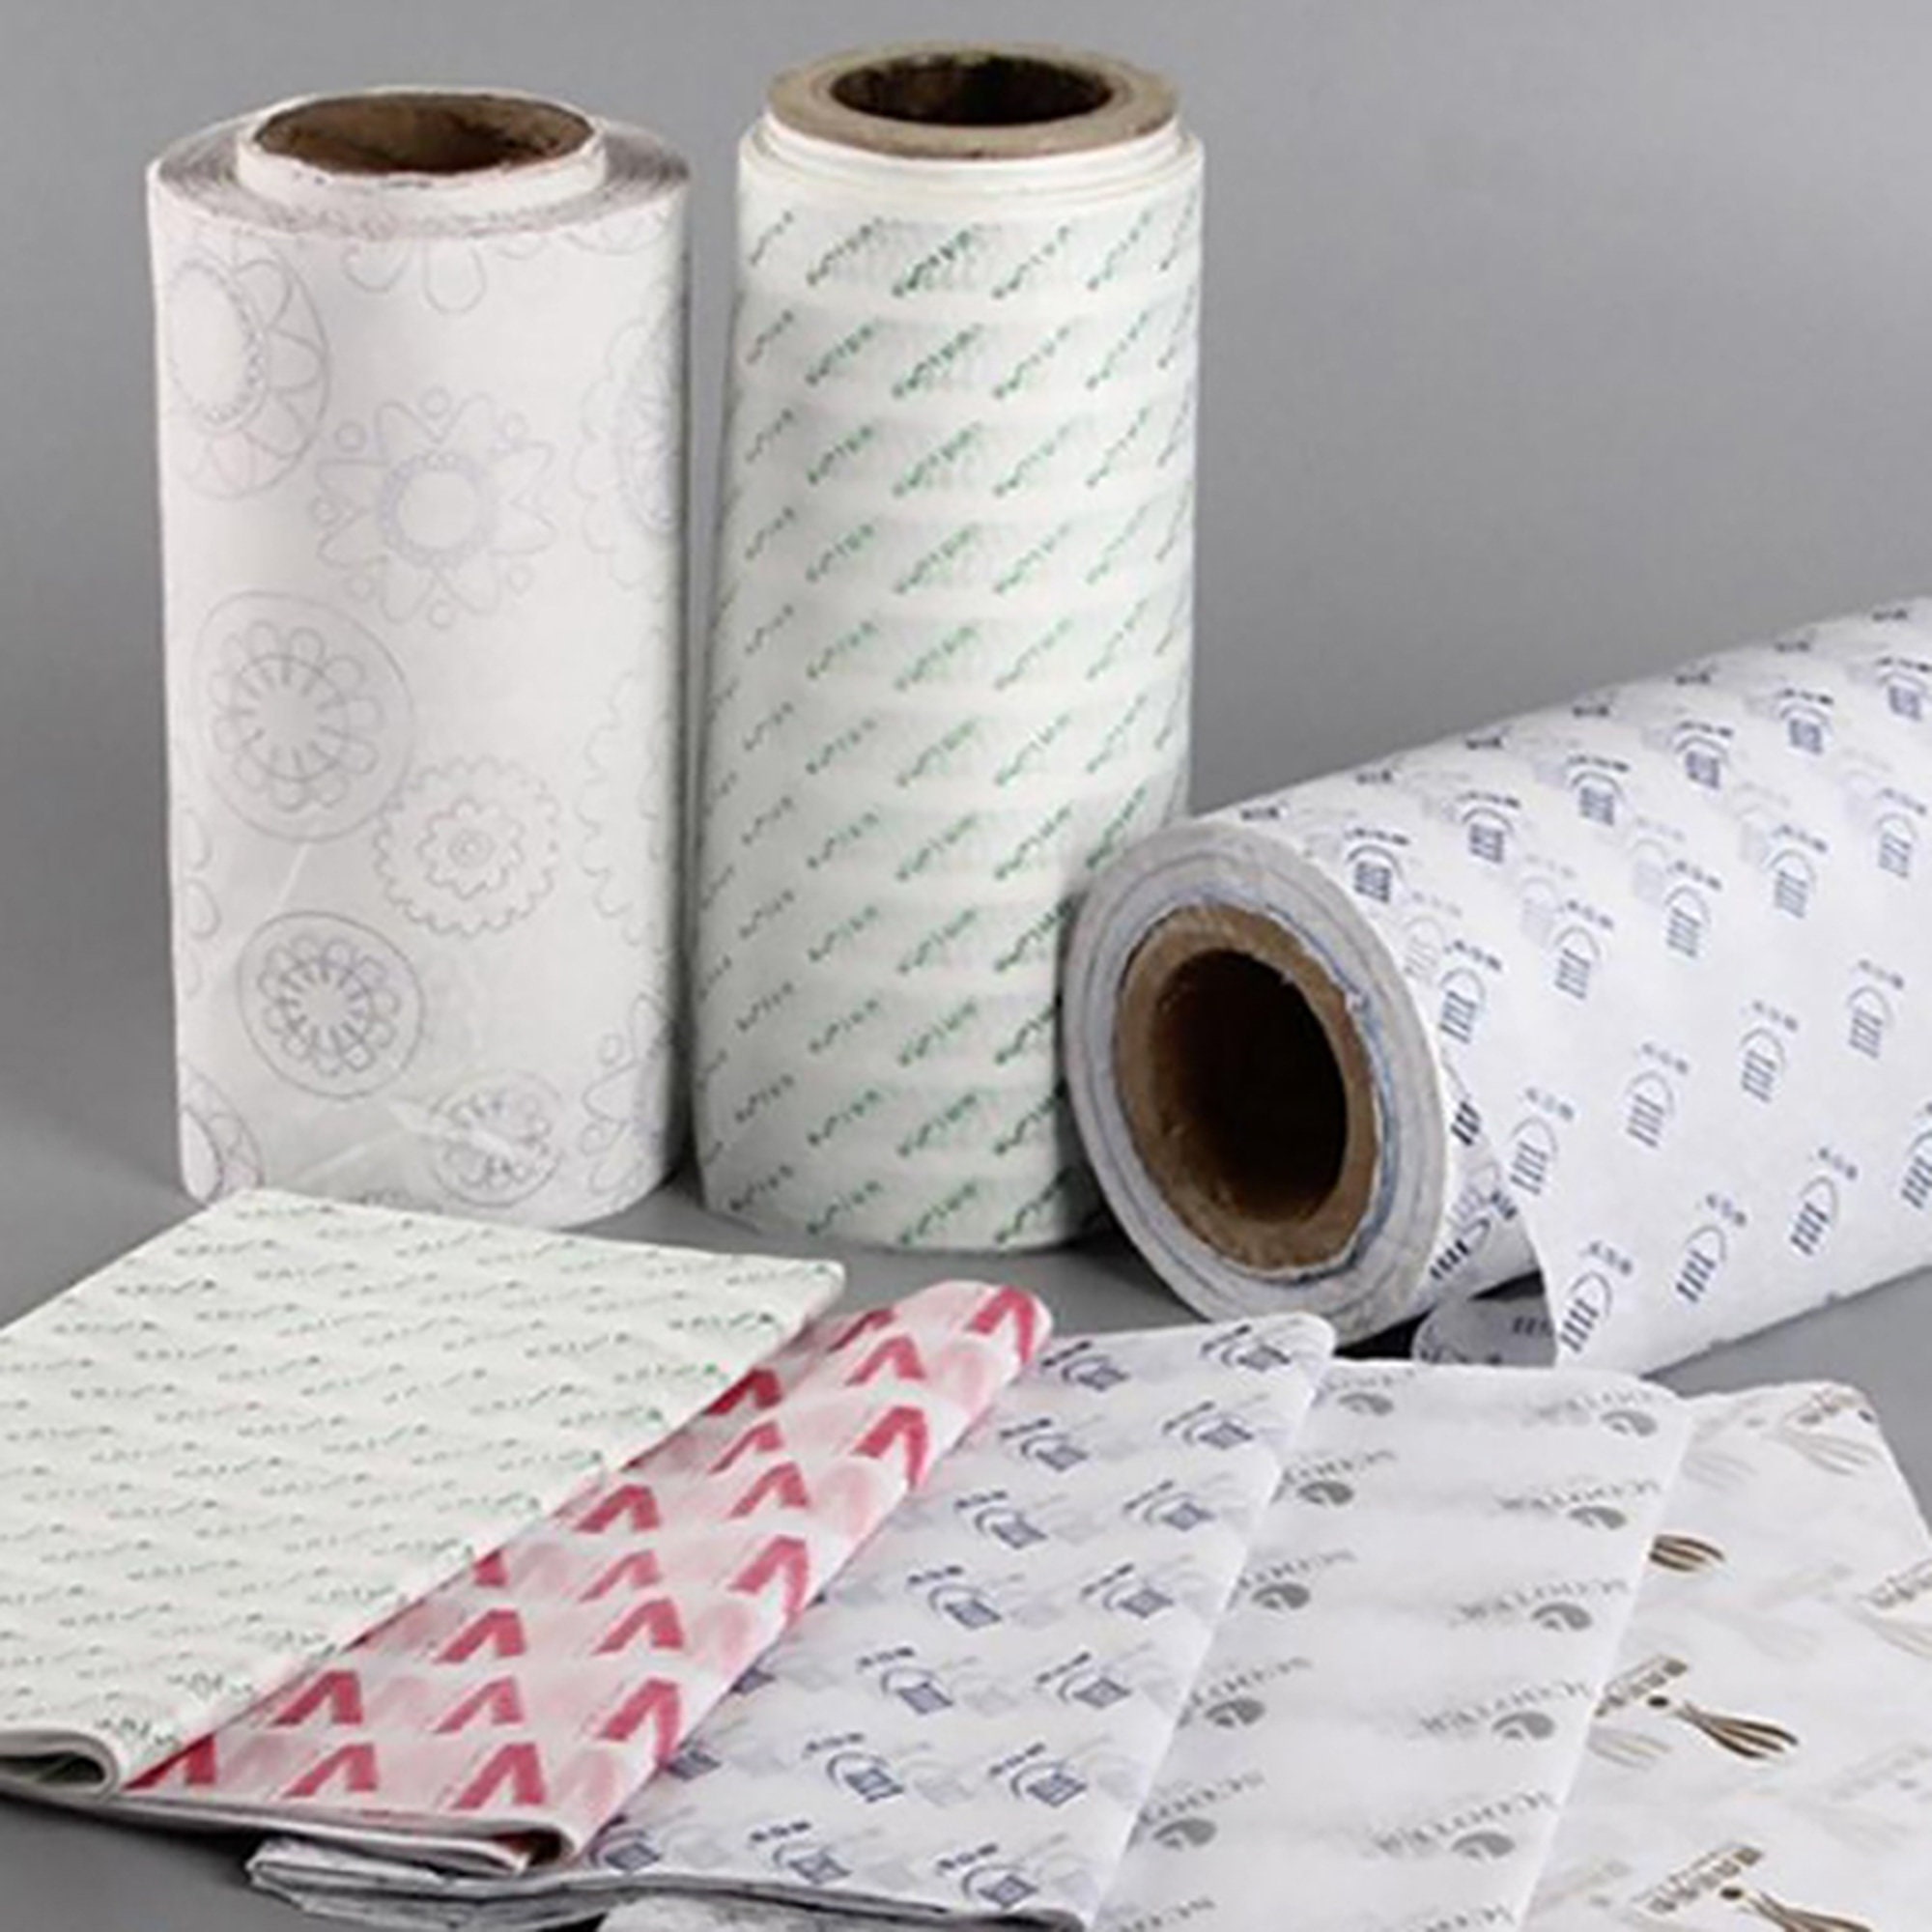 Custom Tissue Paper Printing Low Minimum 5 Sheets Short Run. Wedding,  Anniversary, Birthday and Logo Bespoke Printed Design and Layout. 